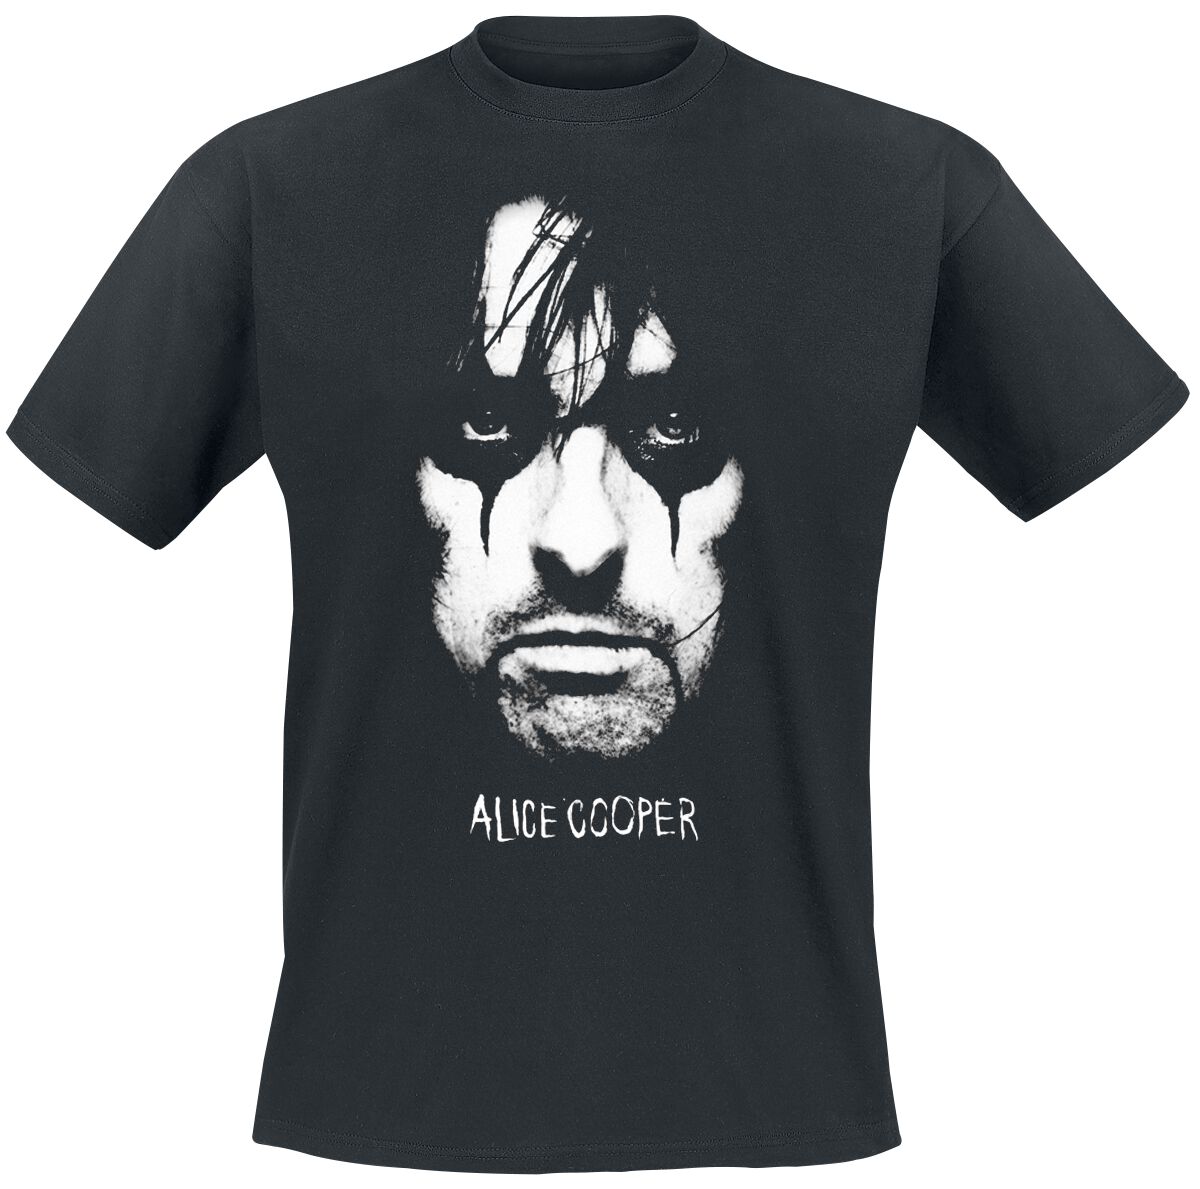 Alice Cooper Portrait T-Shirt schwarz in L